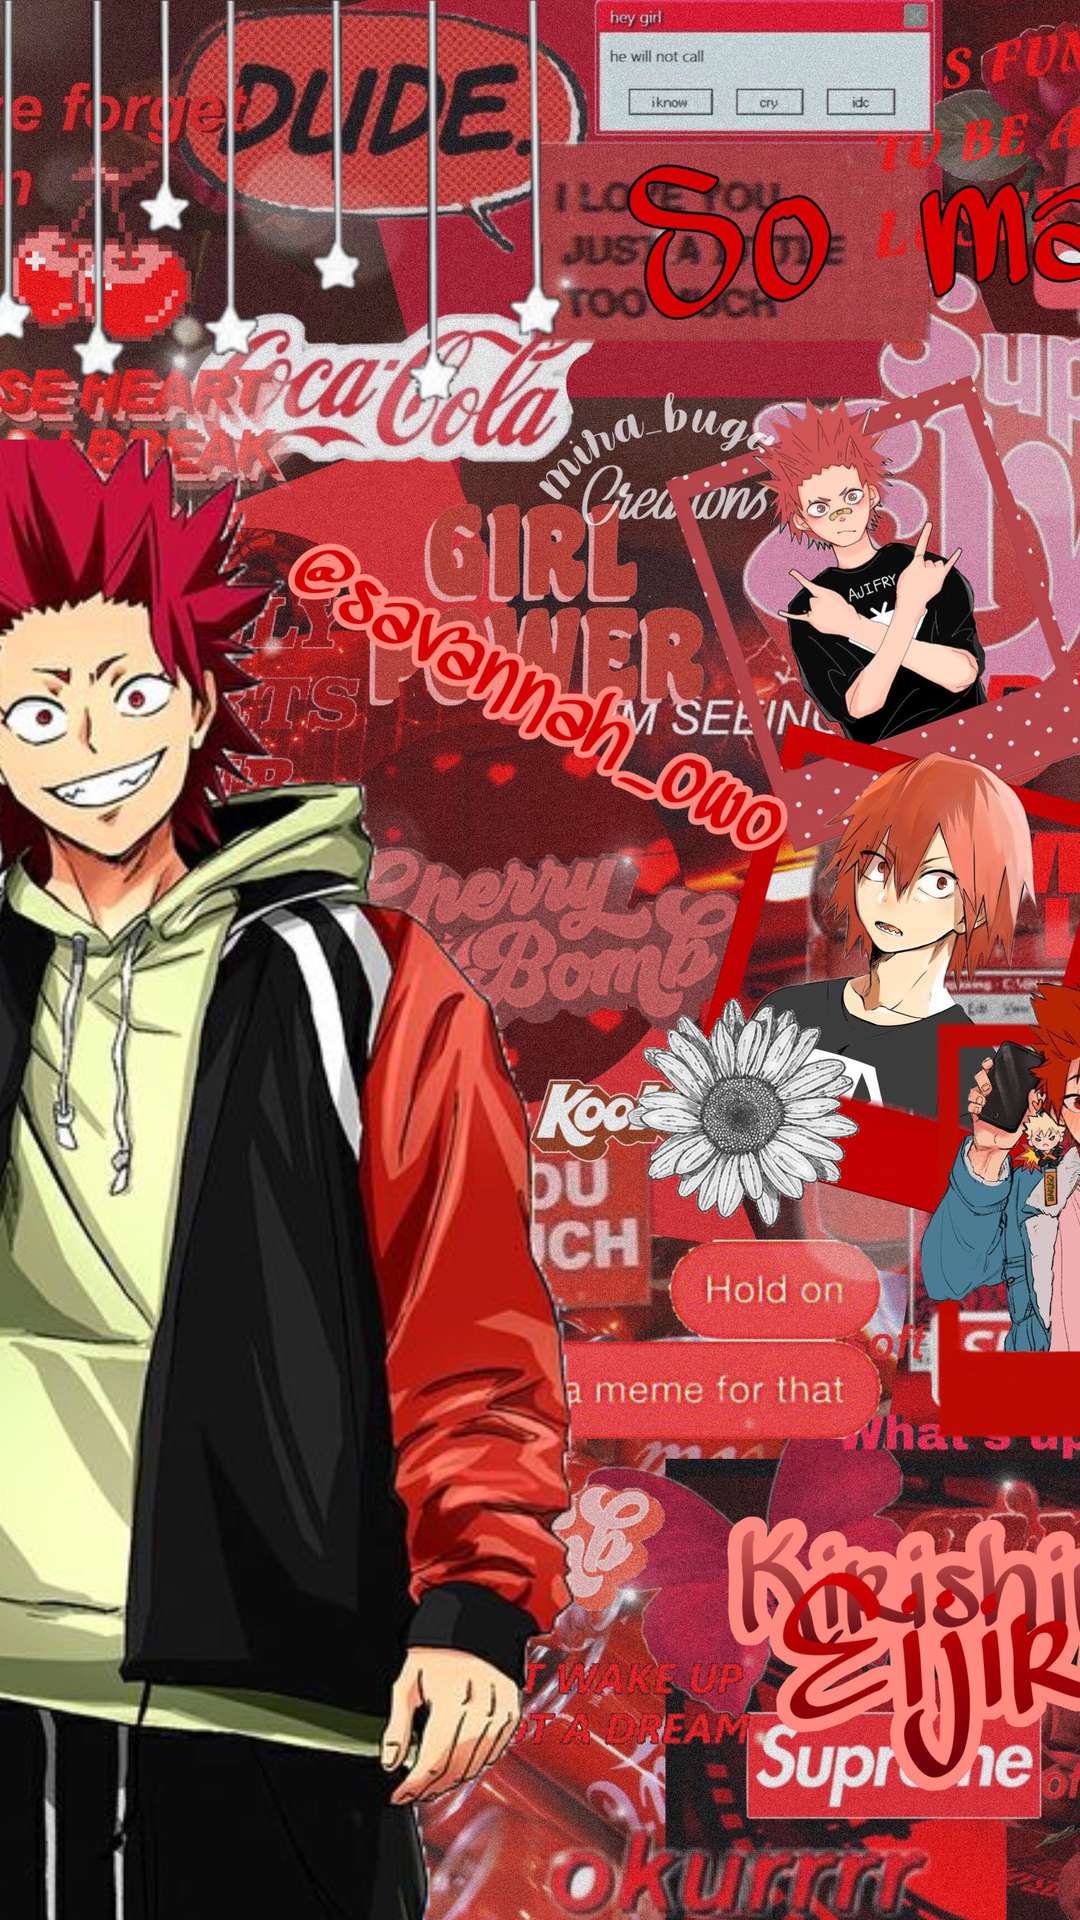 Free customizable anime desktop wallpaper templates  Canva